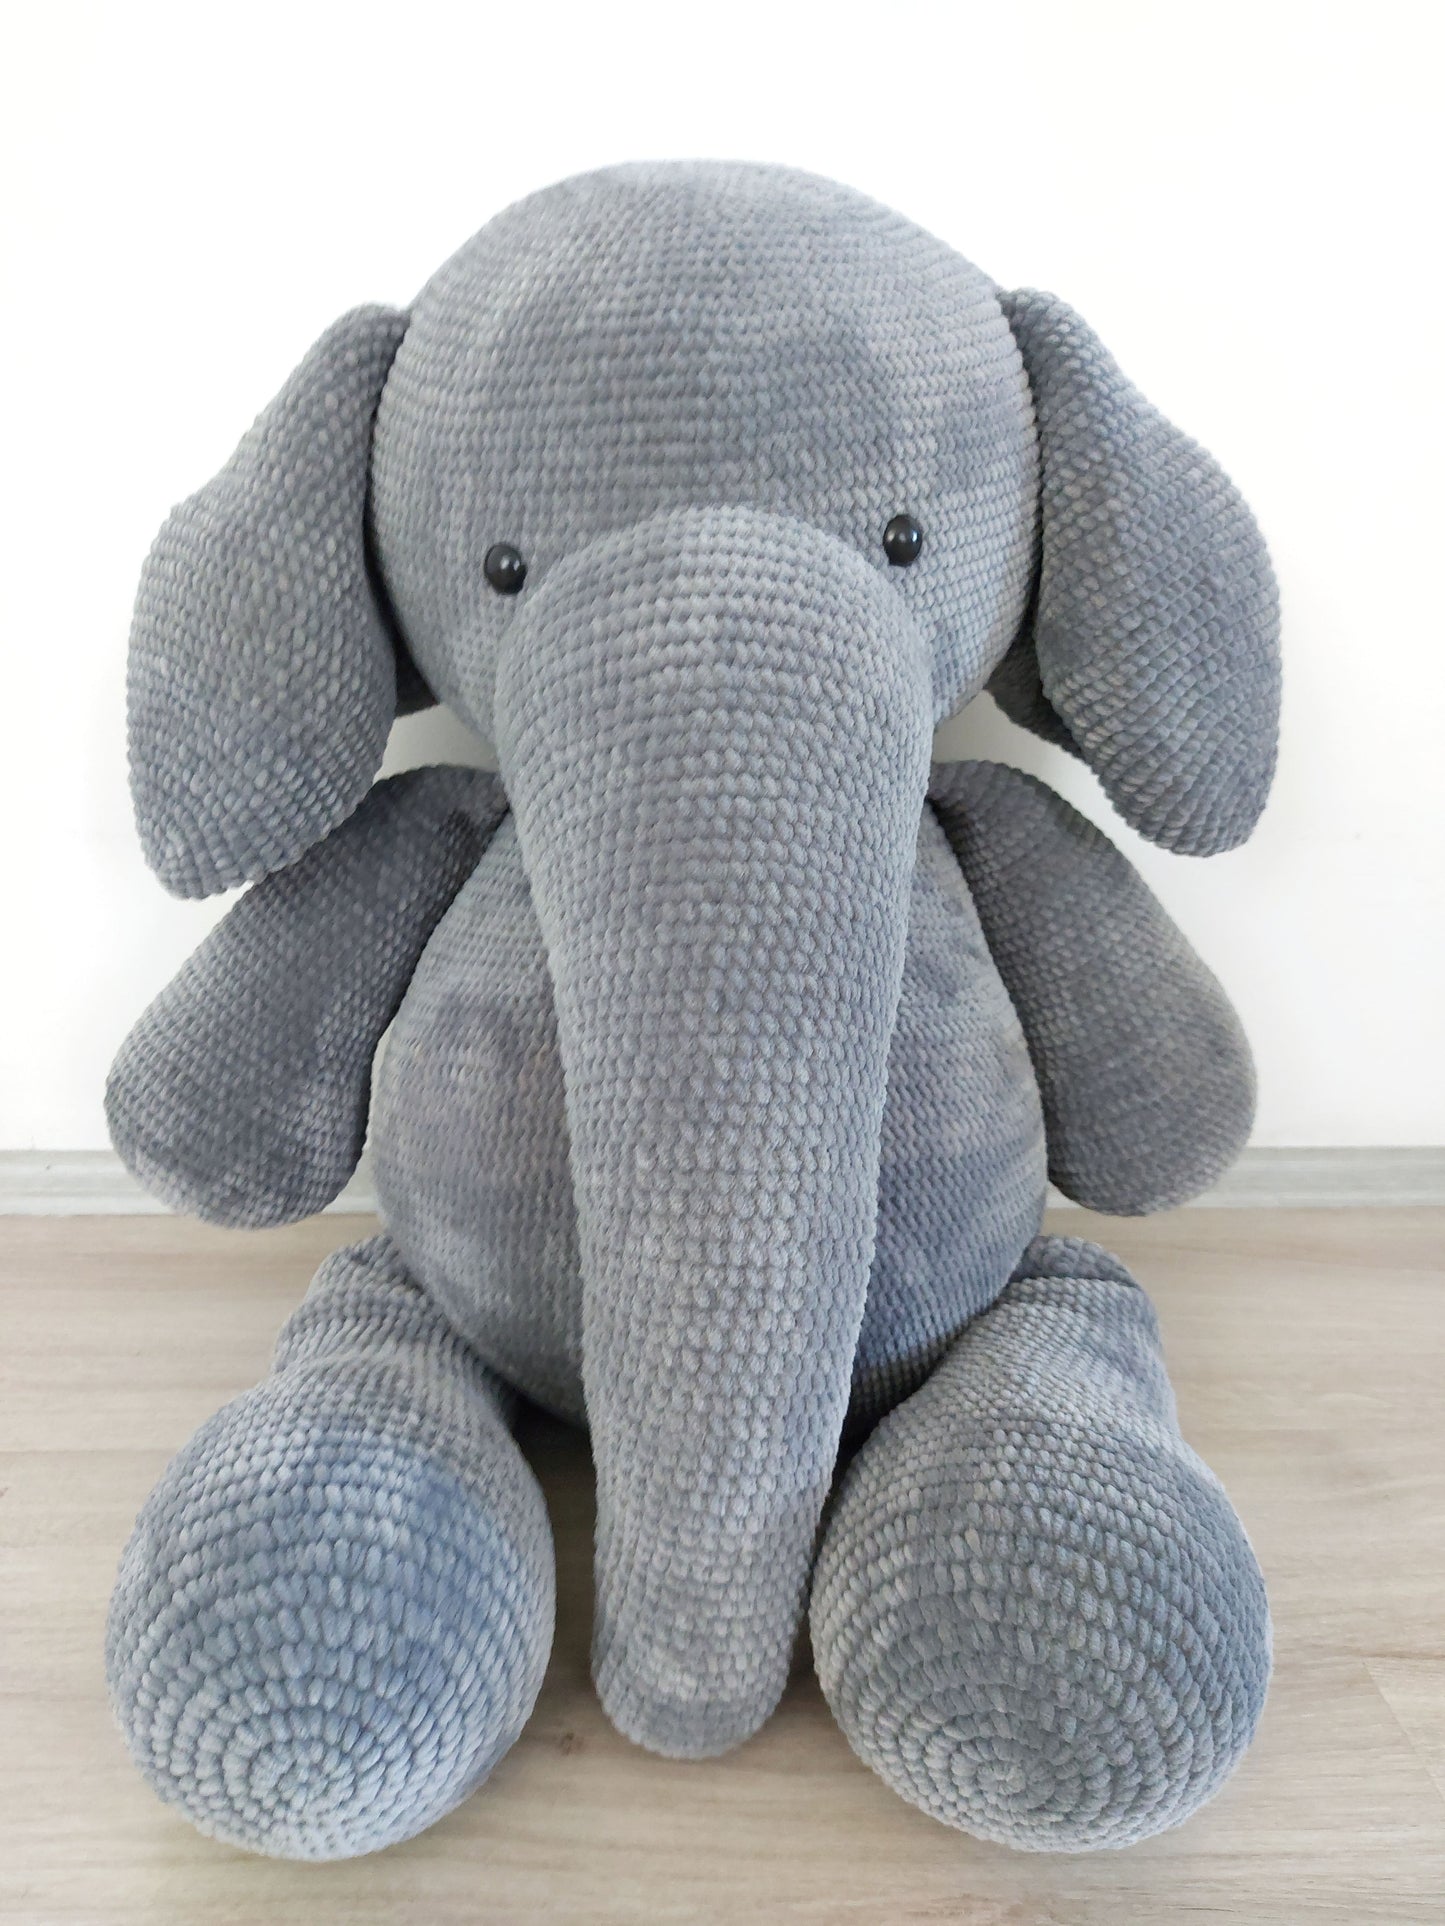 Crochet big grey elephant pillow pattern, big elephant pattern, Amigurumi patterns, Crochet elephant tutorial